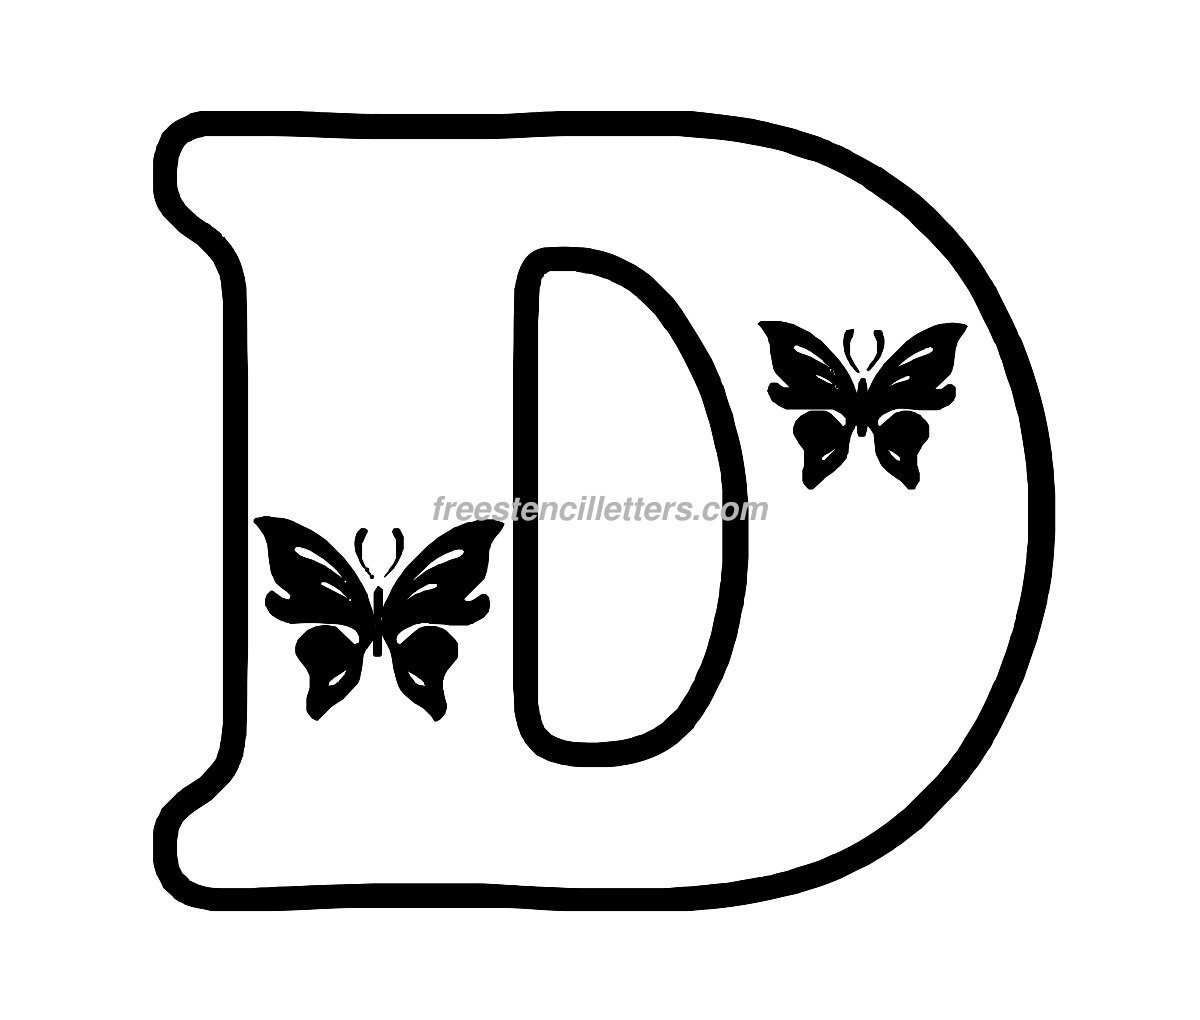 Print D Letter Stencil - Free Stencil Letters - Free Printable Alphabet Stencils To Cut Out